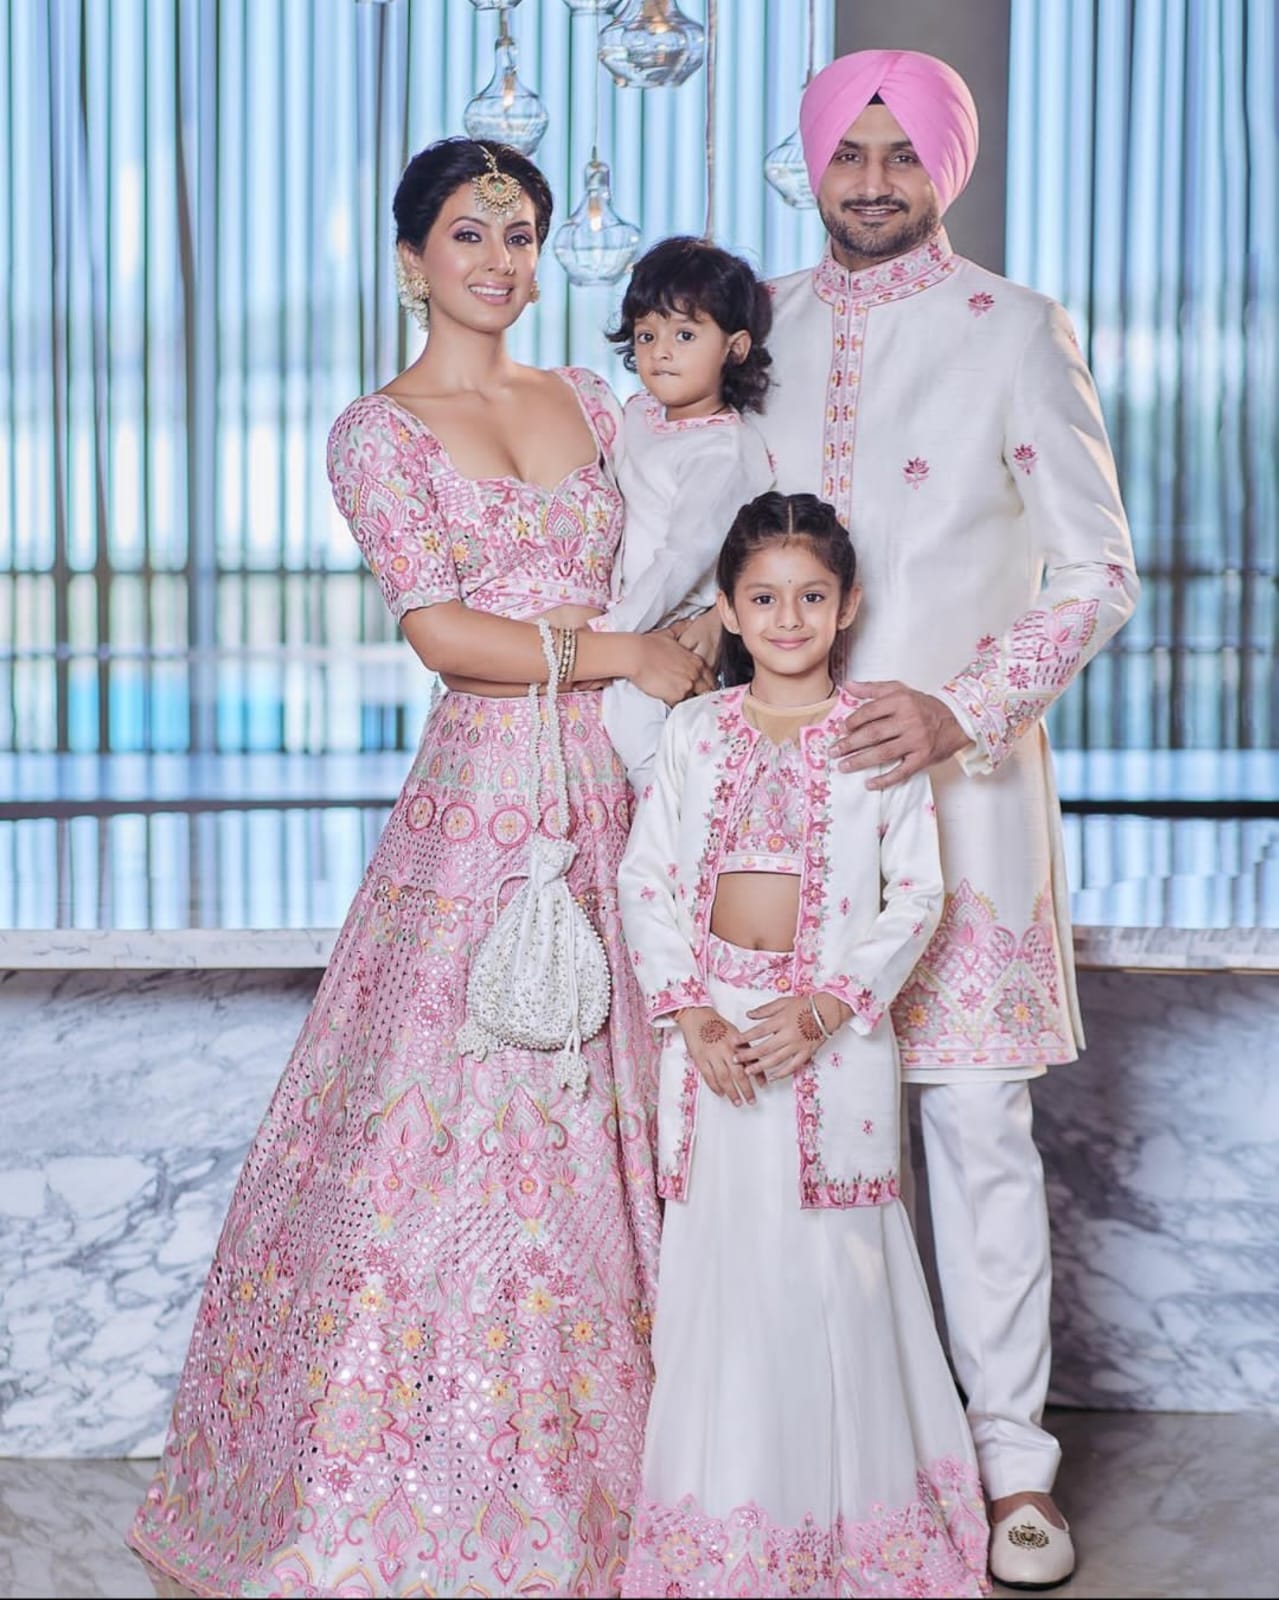 Geeta Basra and Harbhajan Singh to Celebrate Diwali this Year with their family in Jalandhar